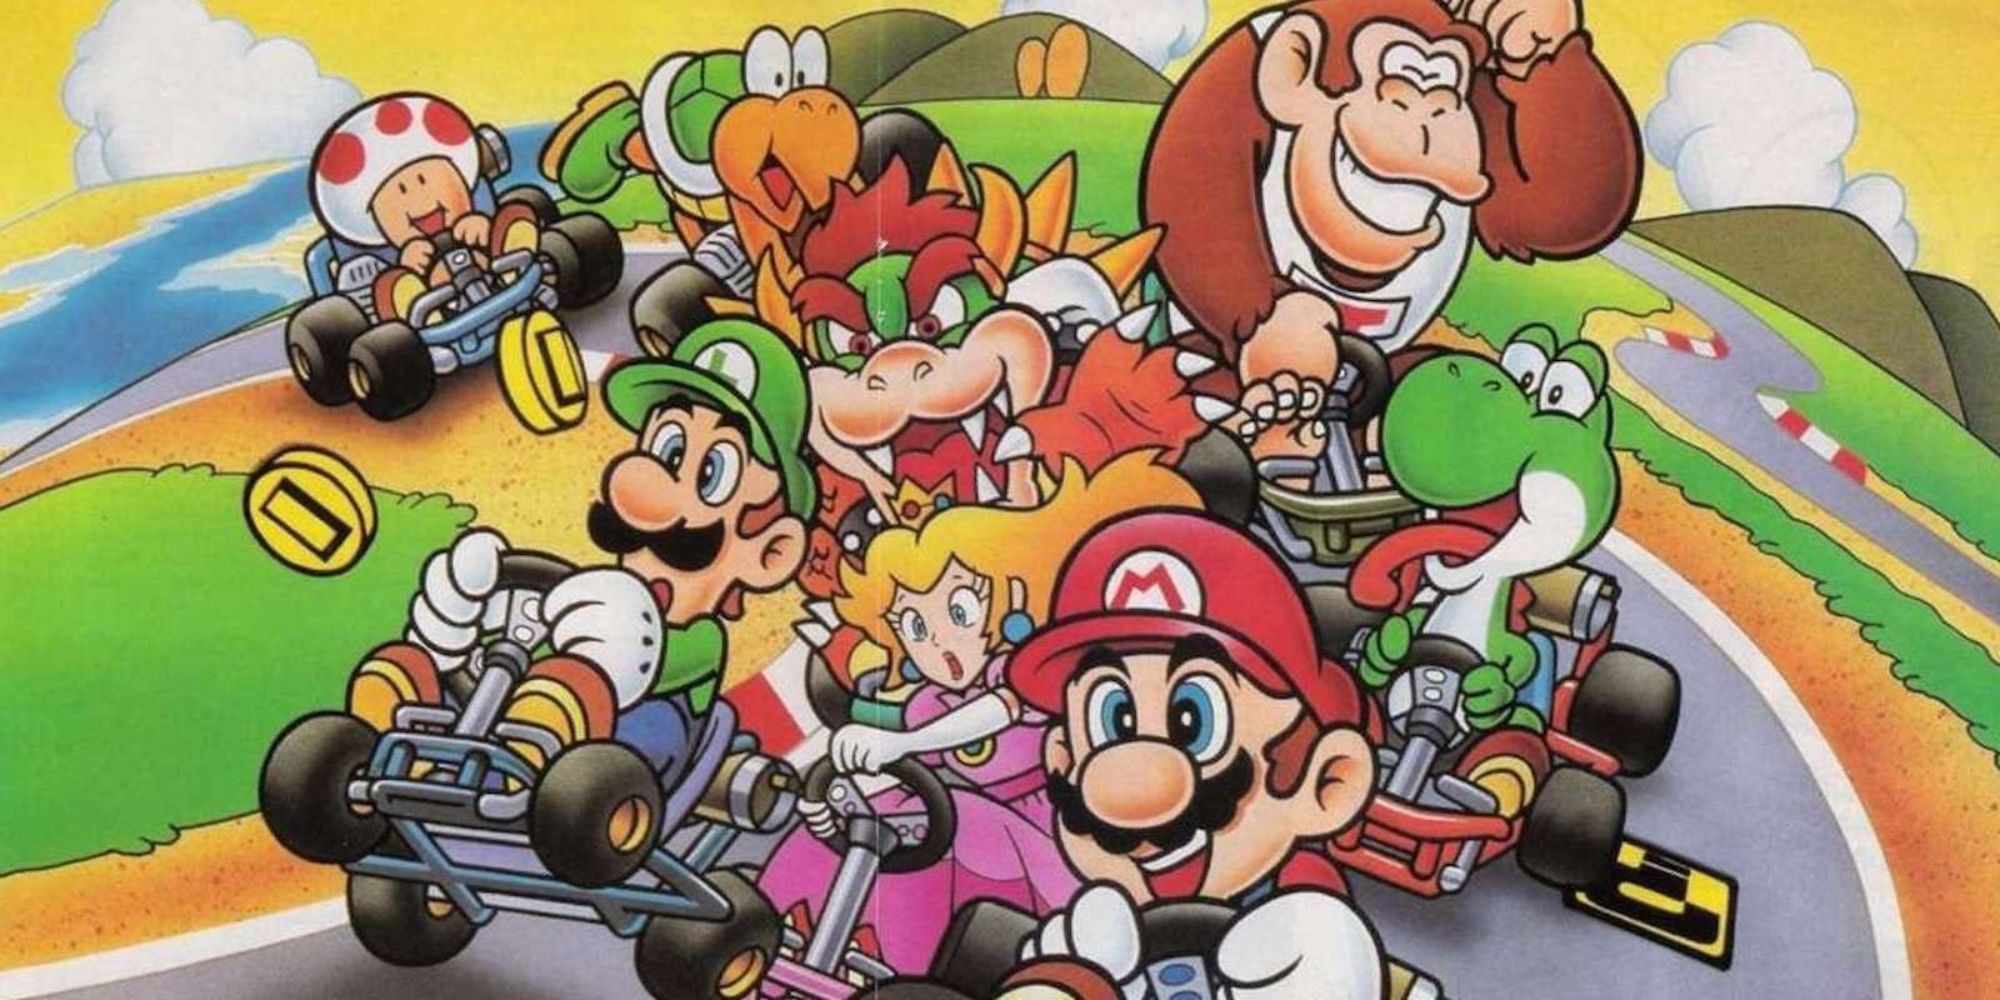 Mario drives ahead of Luigi, Peach, Yoshi, Bowser, Donkey Kong Jr., Koopa Troopa, and Toad